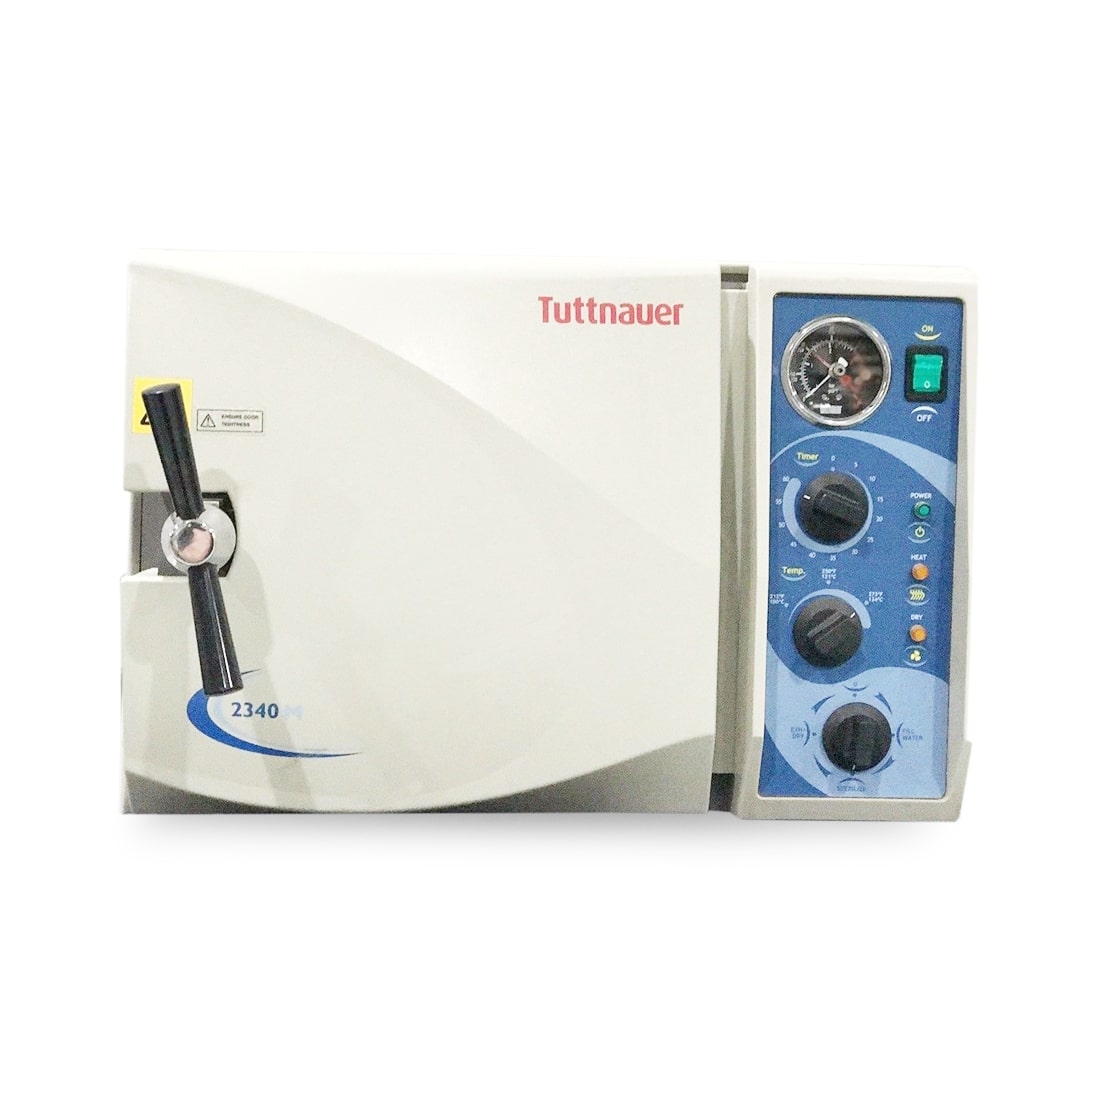 Tuttnauer 2340M - Autoclave Manual Sterilizer